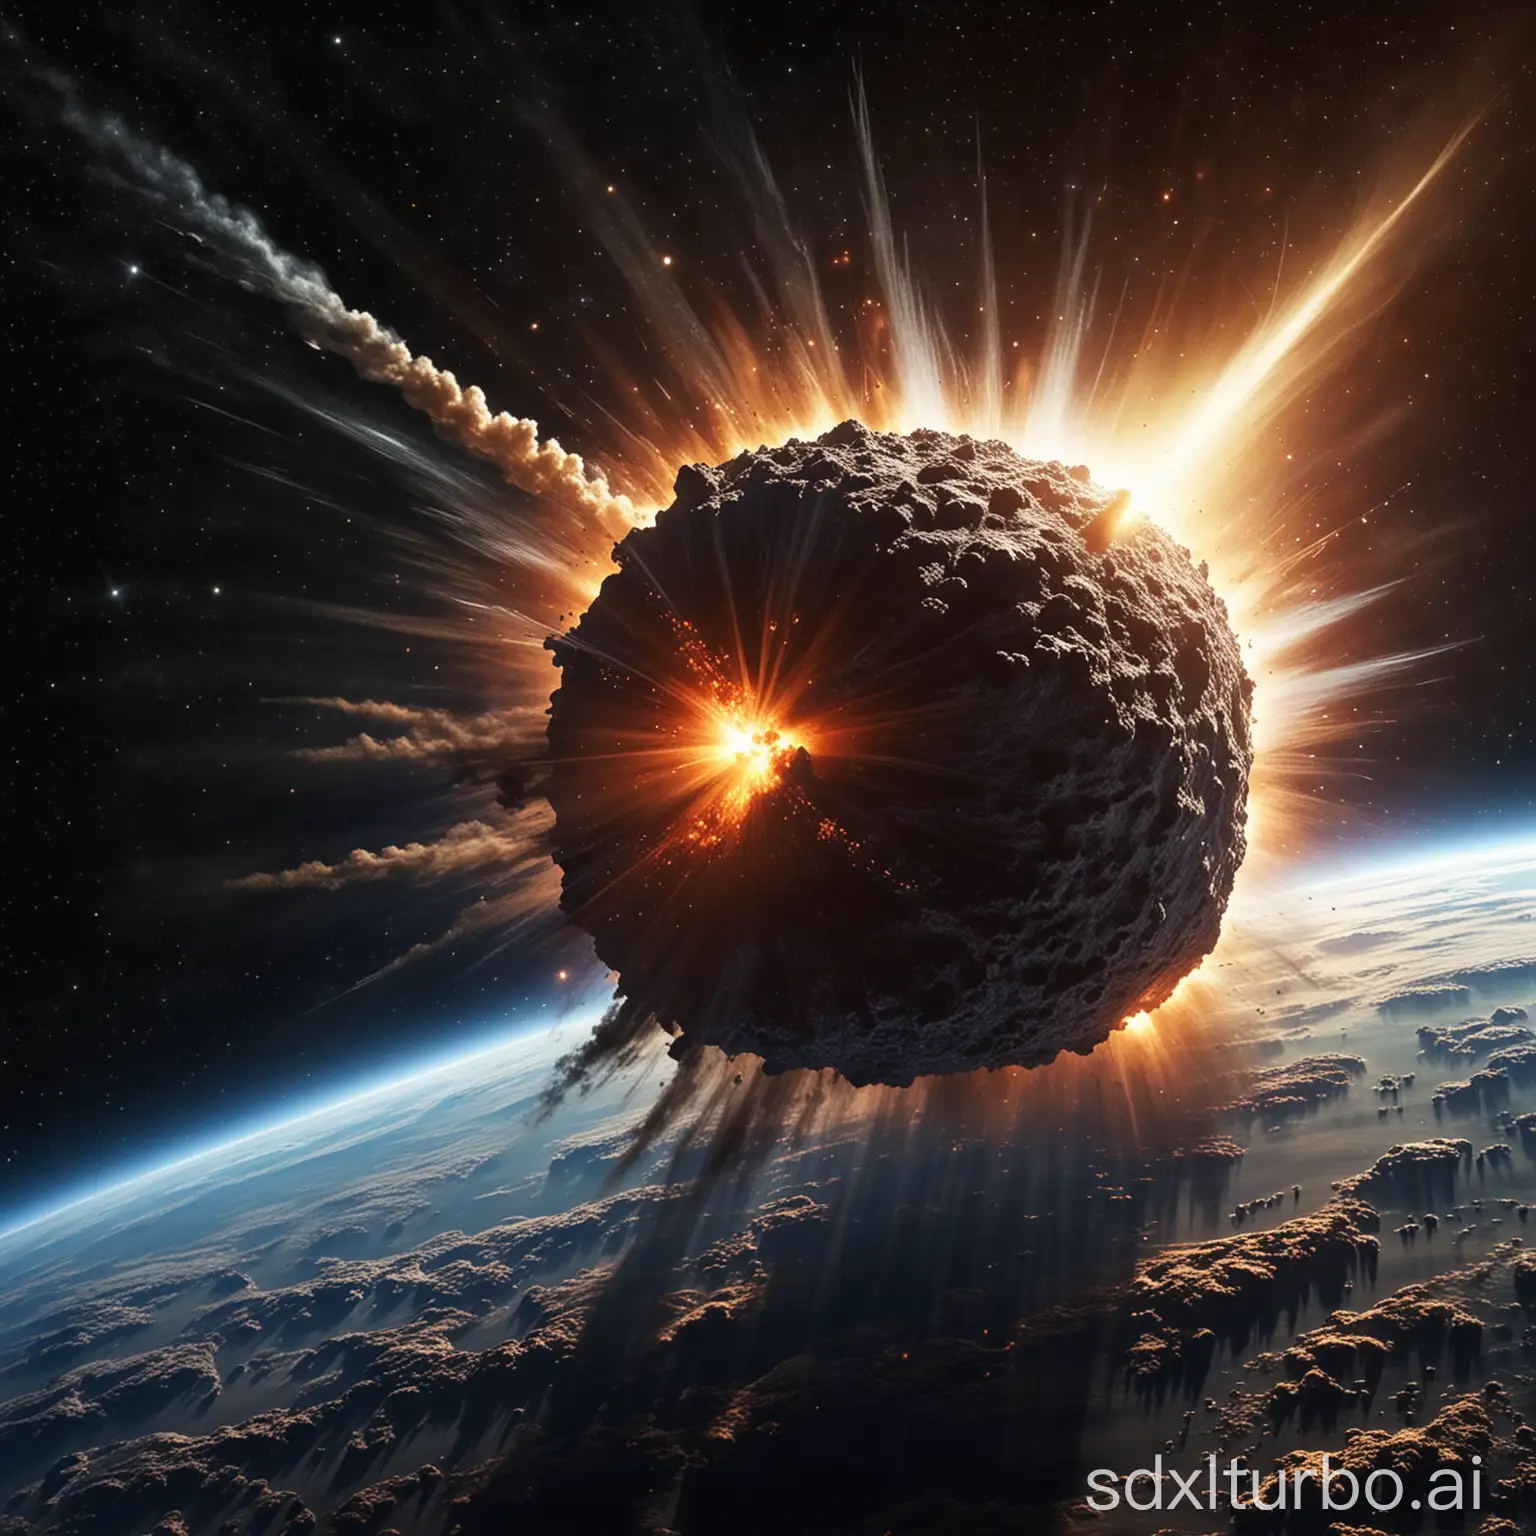 Apocalyptic-Scene-Comet-Impacting-Earth